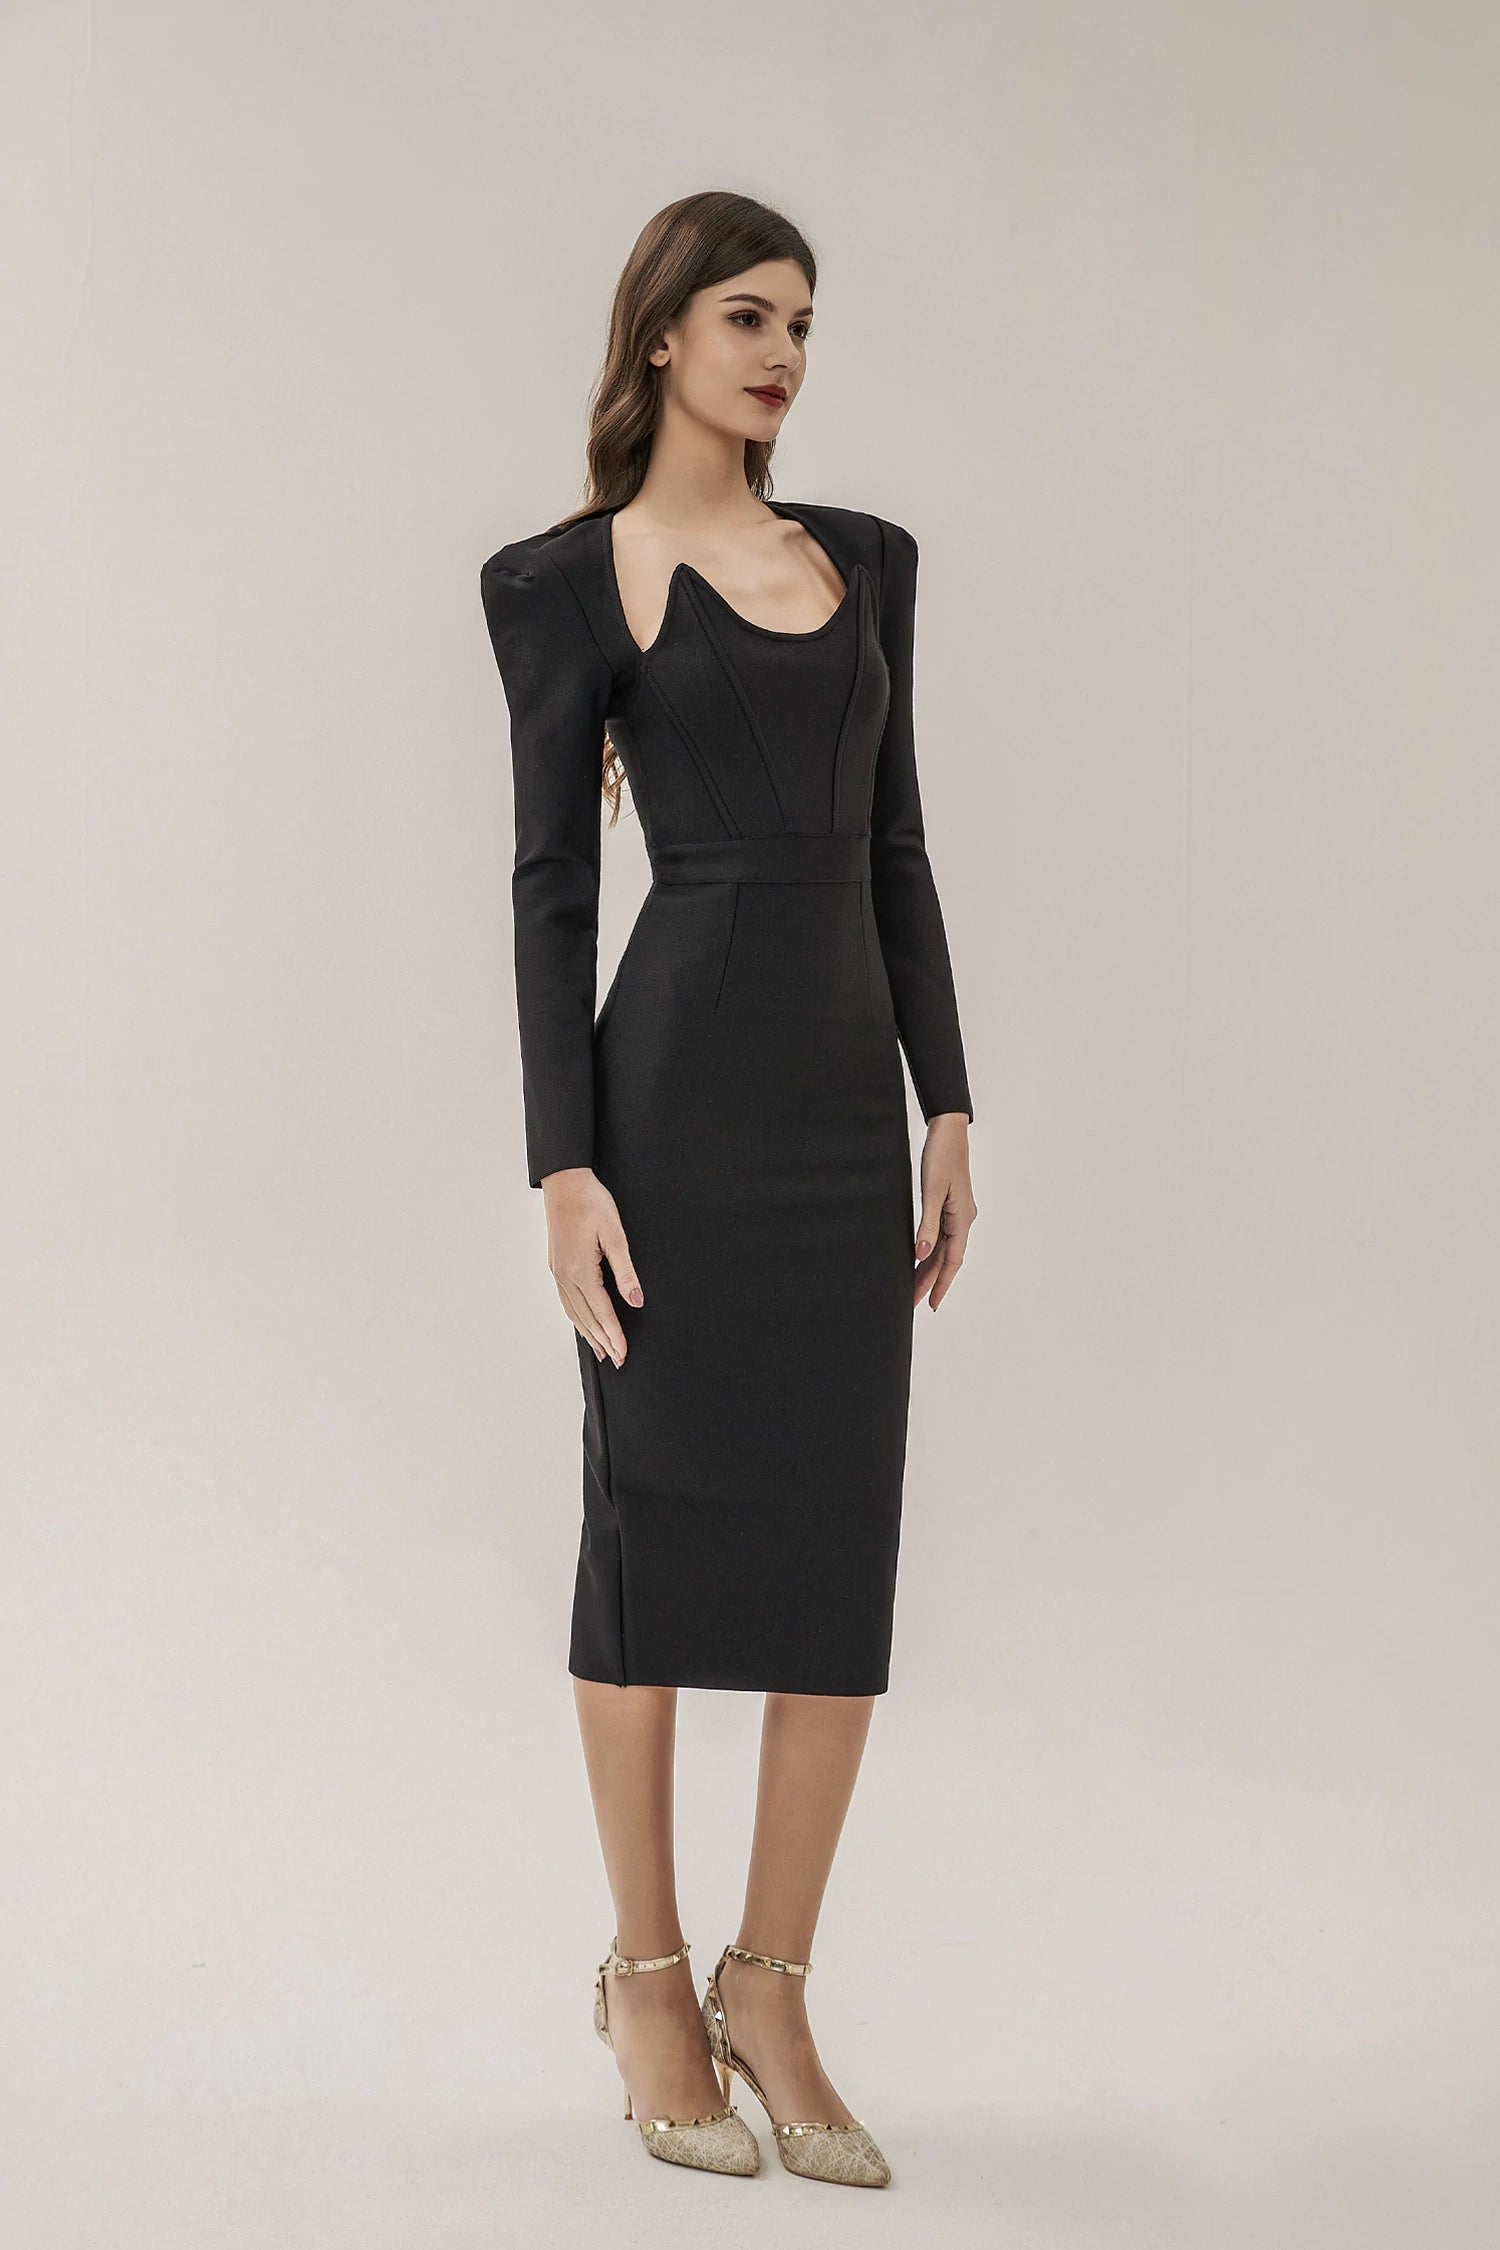 Alaina Black Long Sleeve Midi Work Dress